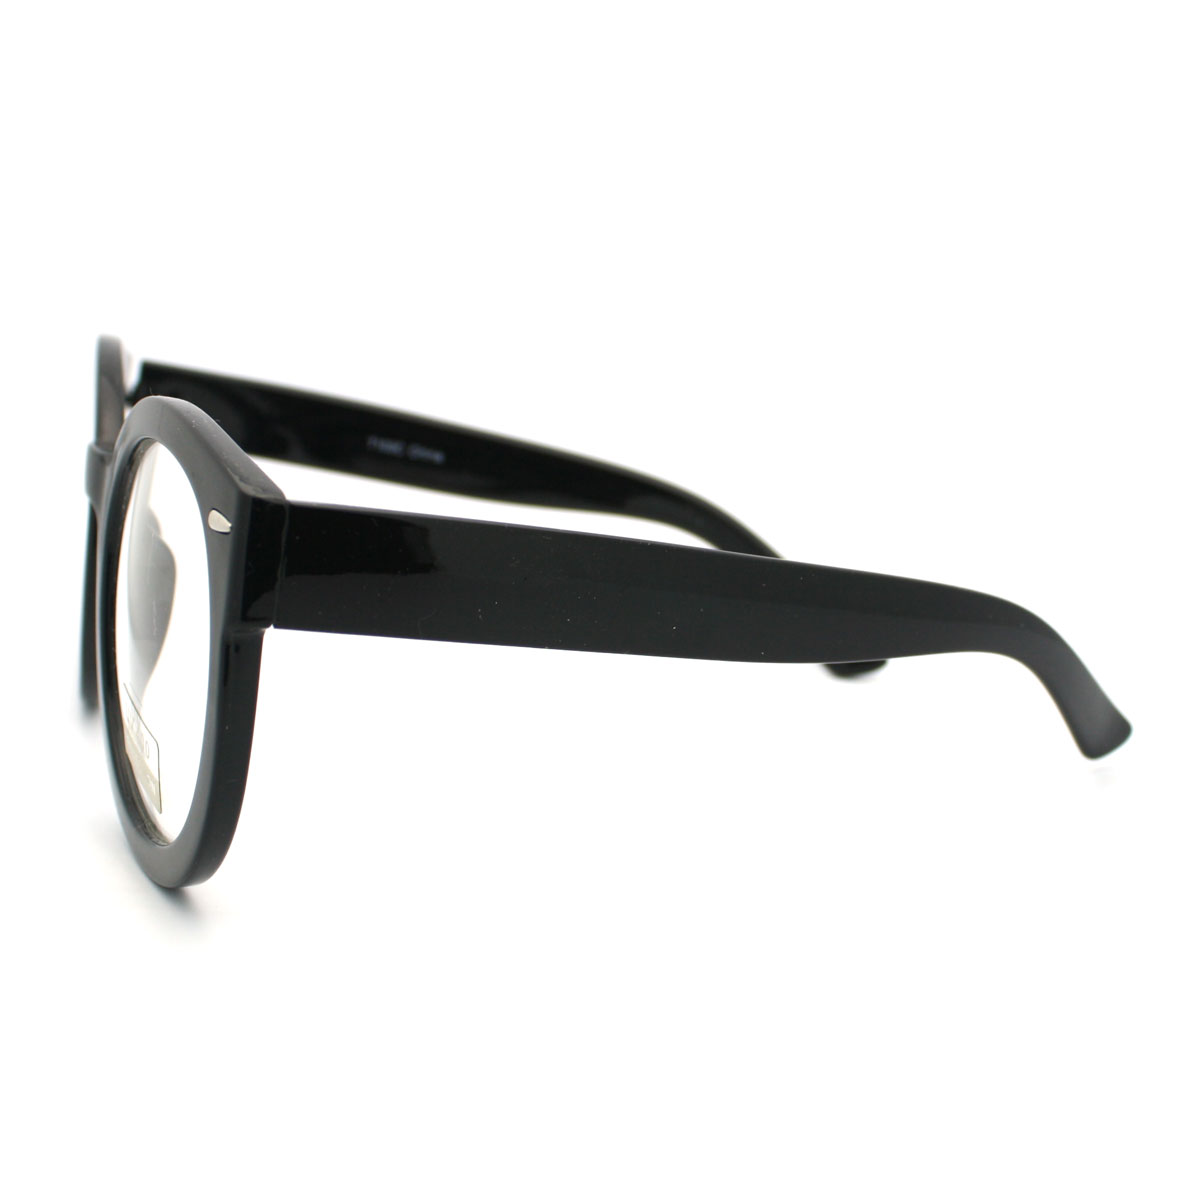 Oversized Round Thick Horn Rim Clear Lens Fashion Eye Glasses Frame Black - image 3 of 3